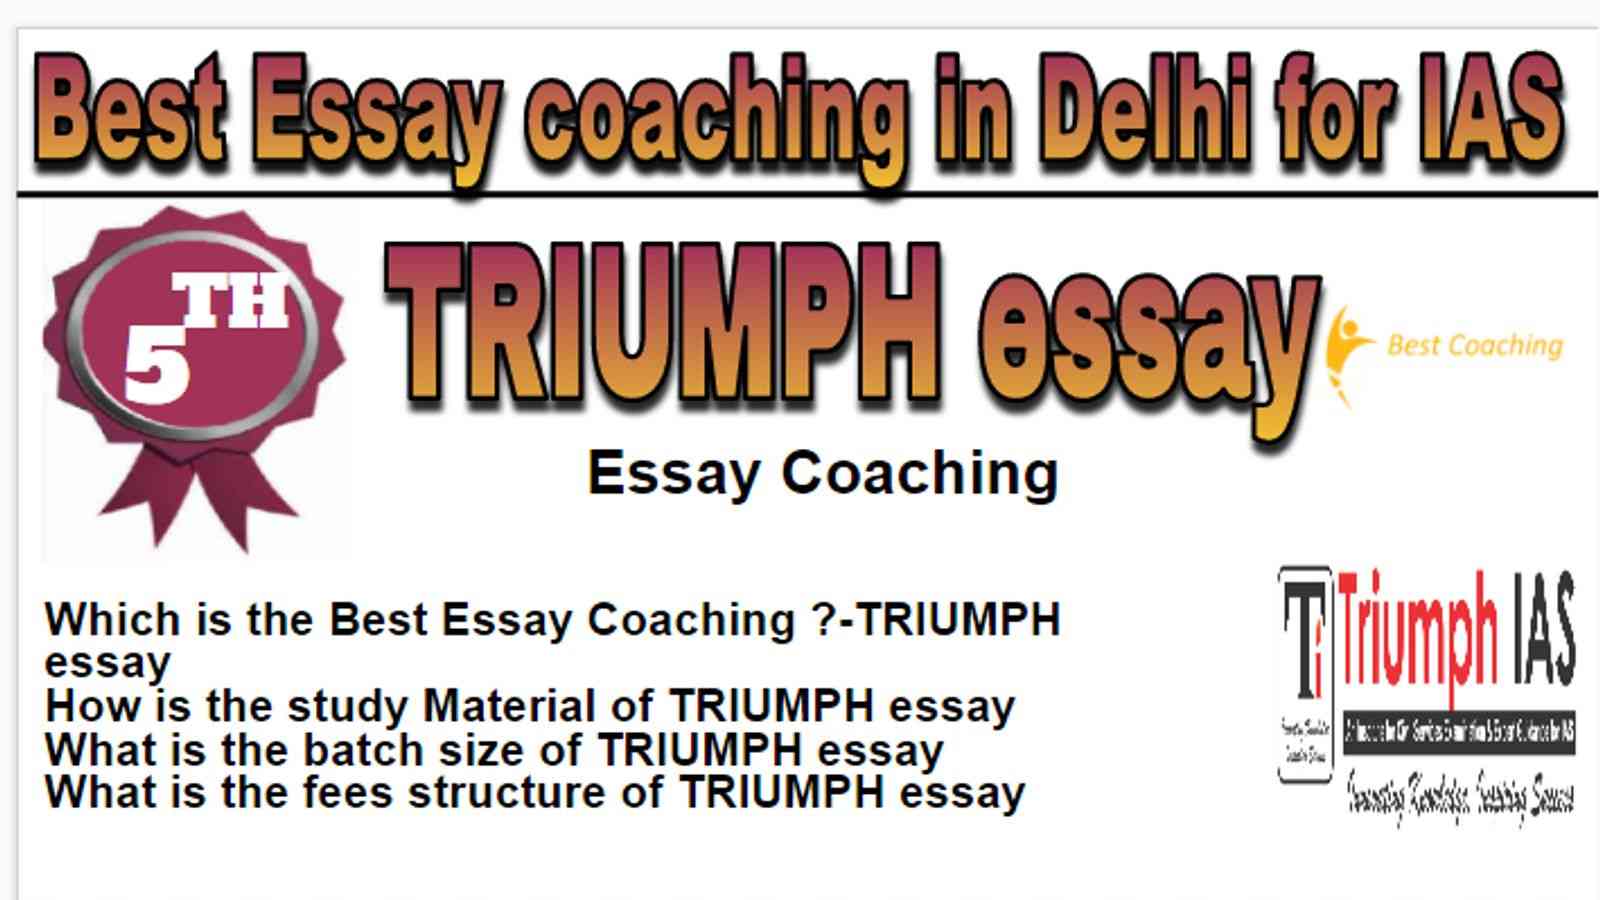 Rank 5 Best essay coaching in Delhi for IAS